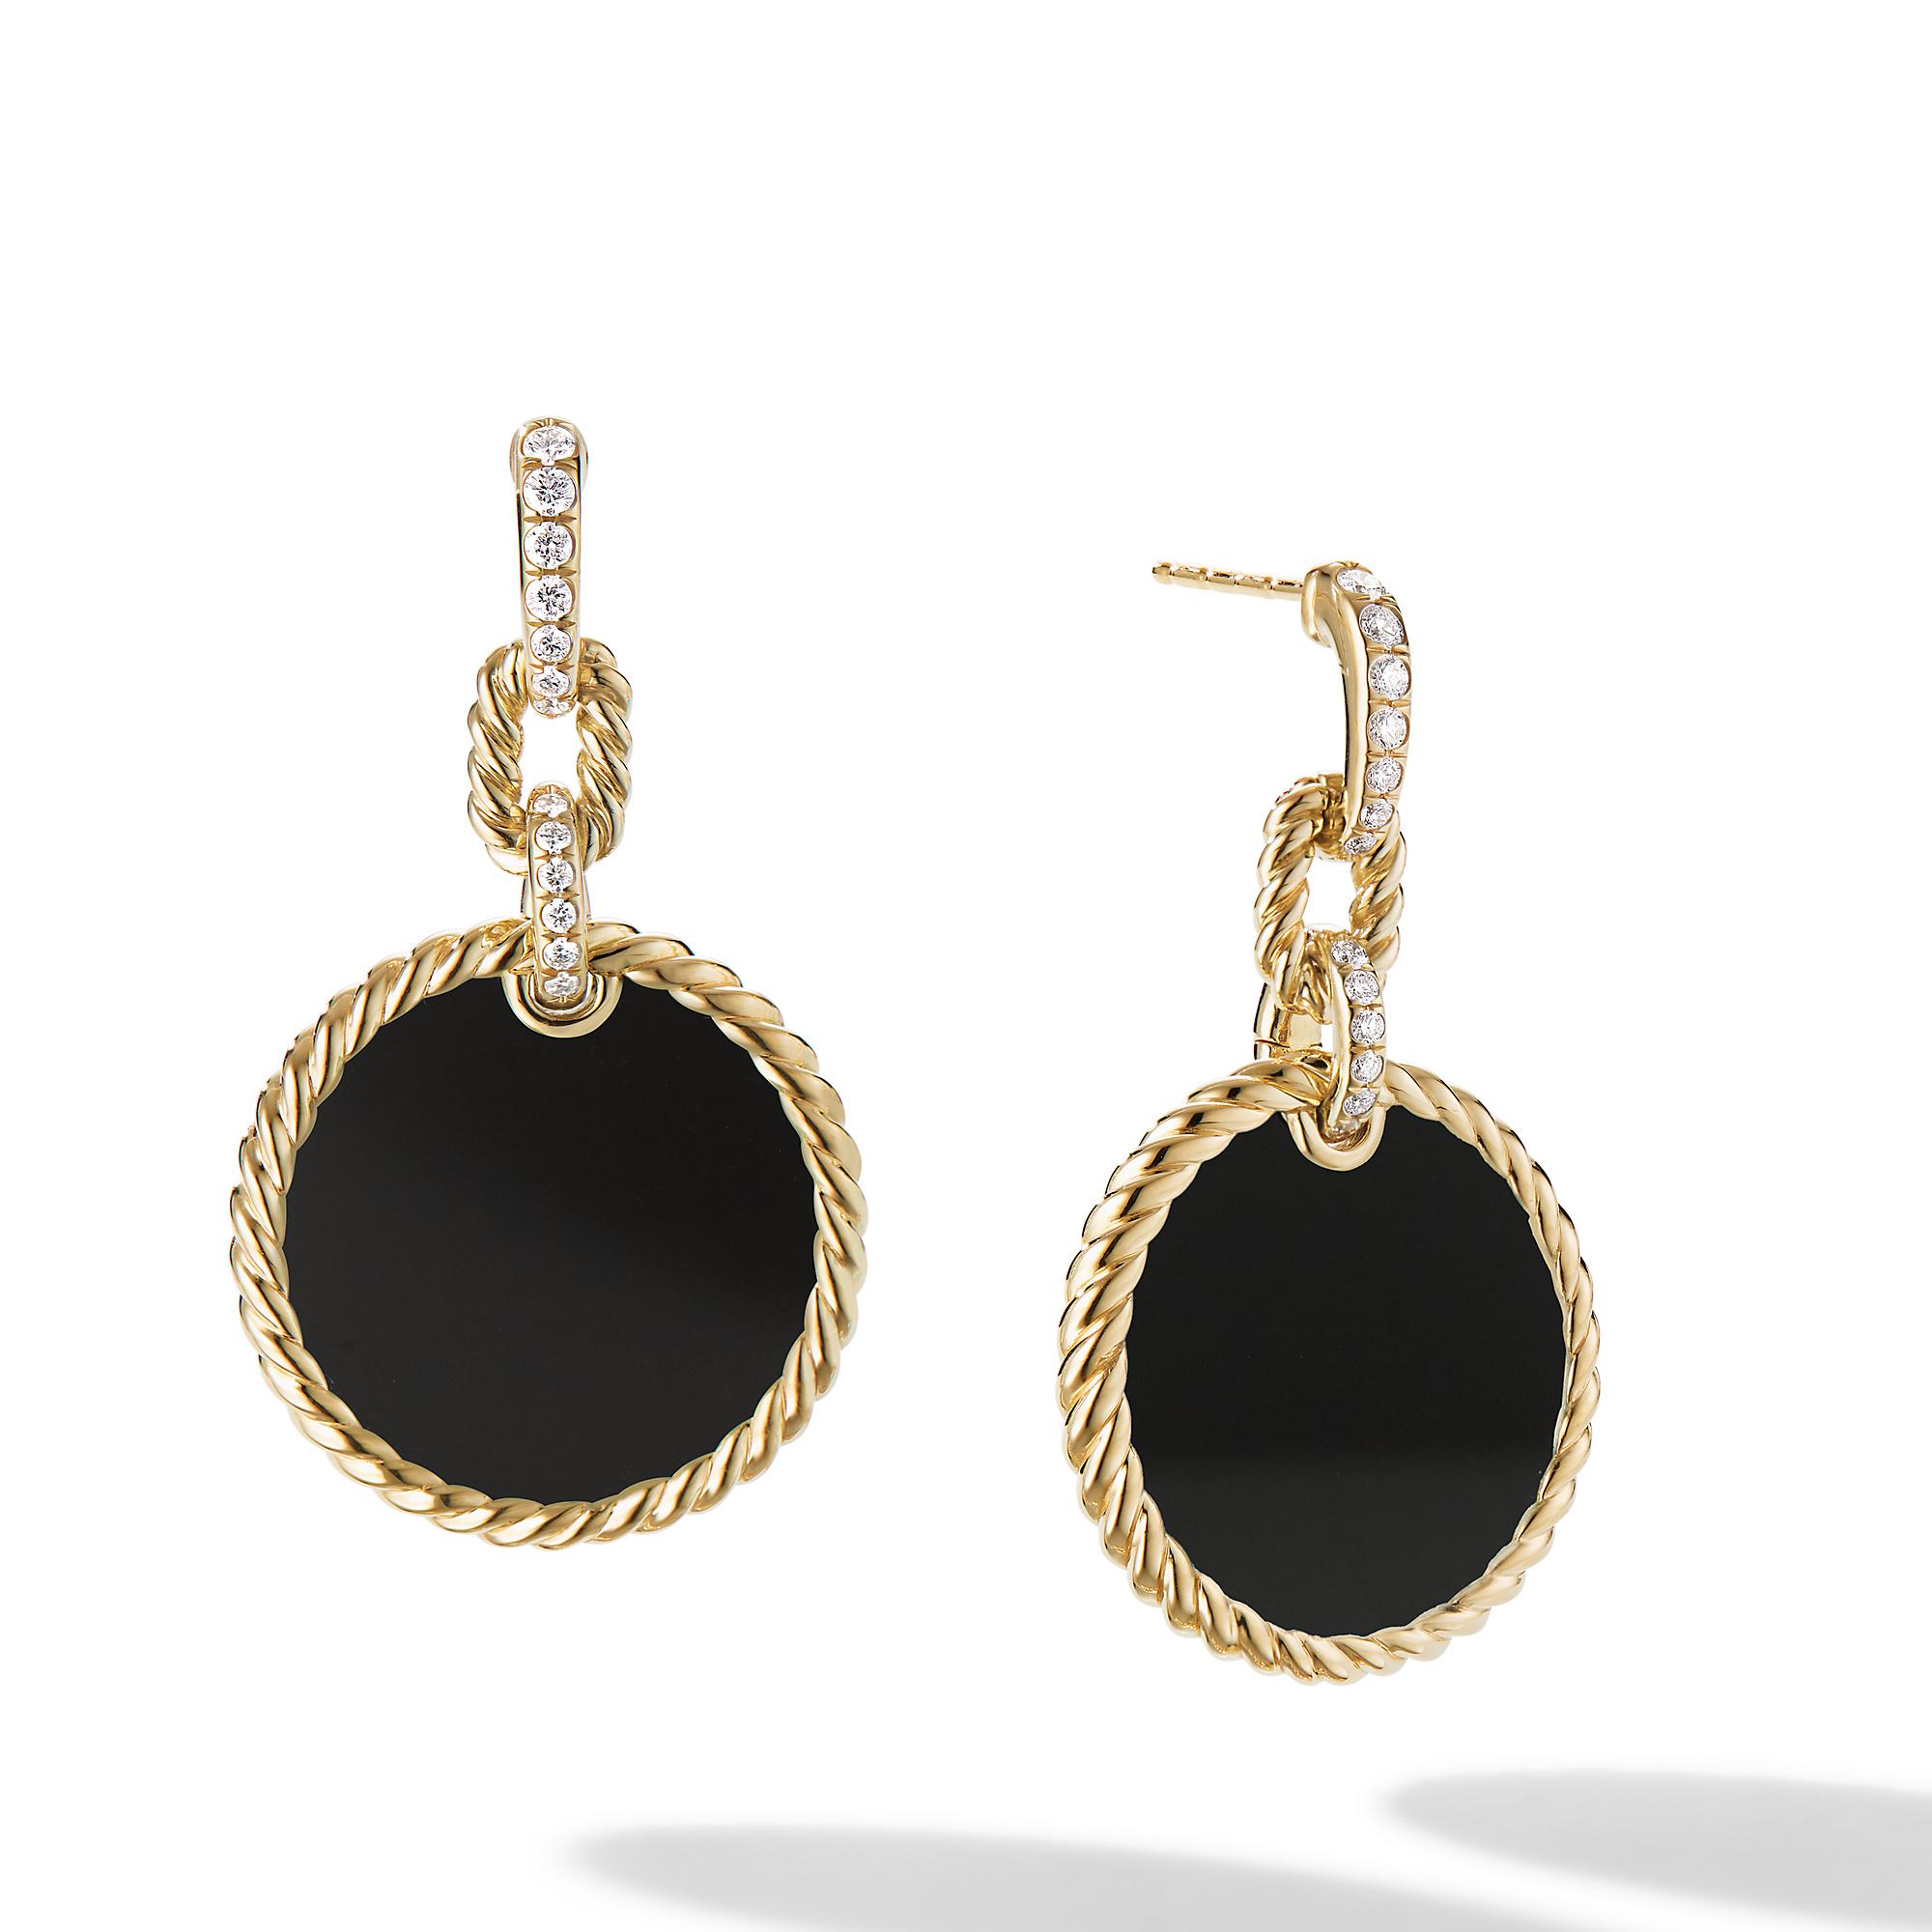 David Yurman Elements Drop Earrings 18K Yellow Gold with Black Onyx and Pave Diamonds